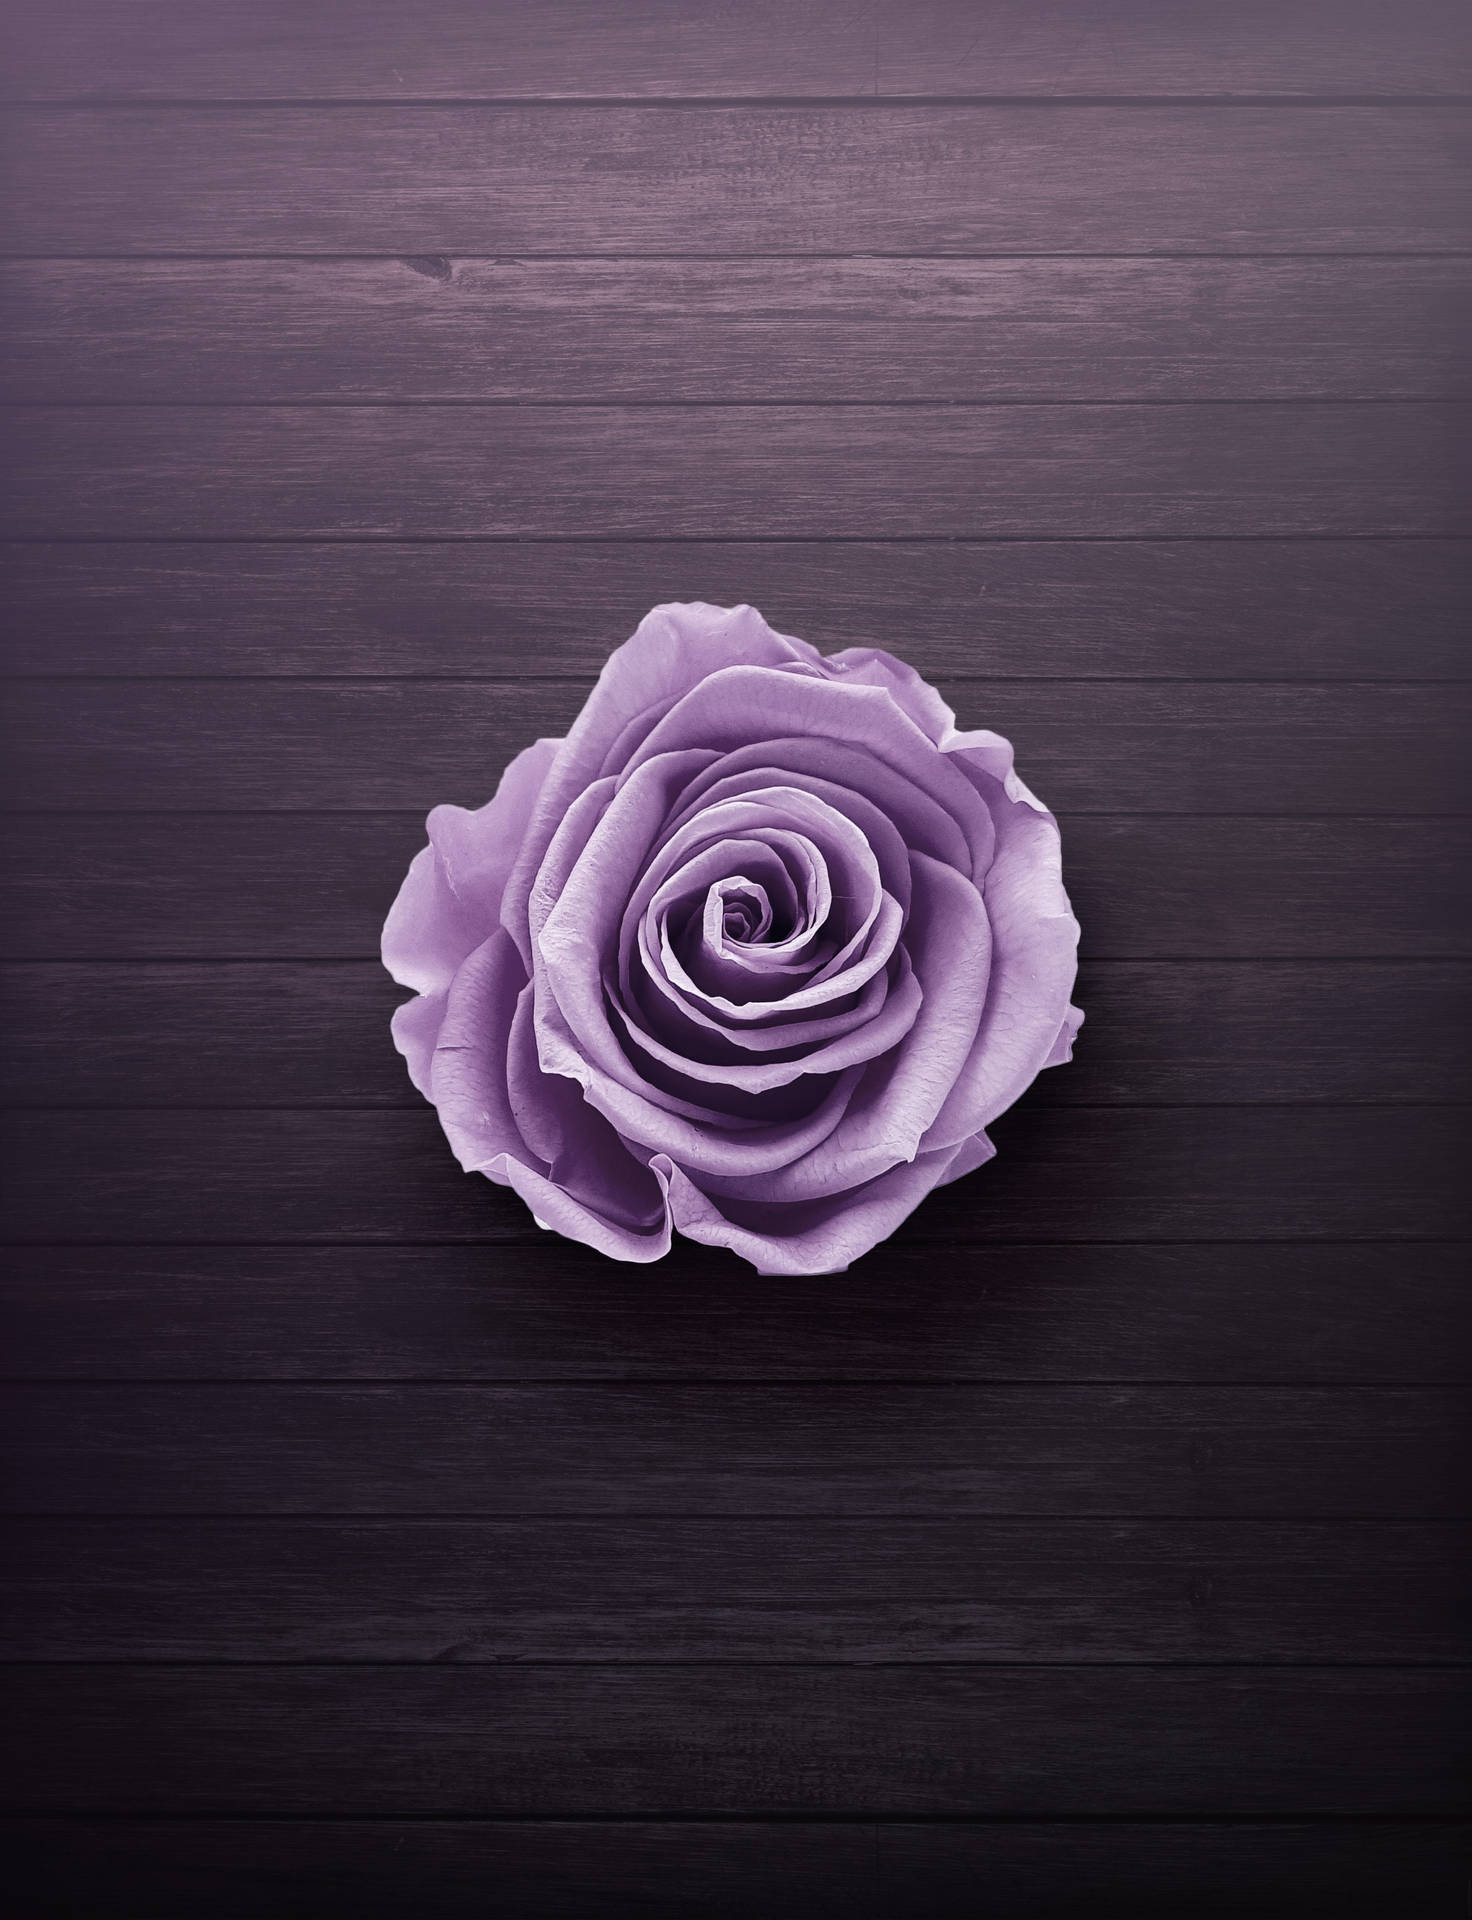 Rose On Wood Neon Purple Iphone Wallpaper